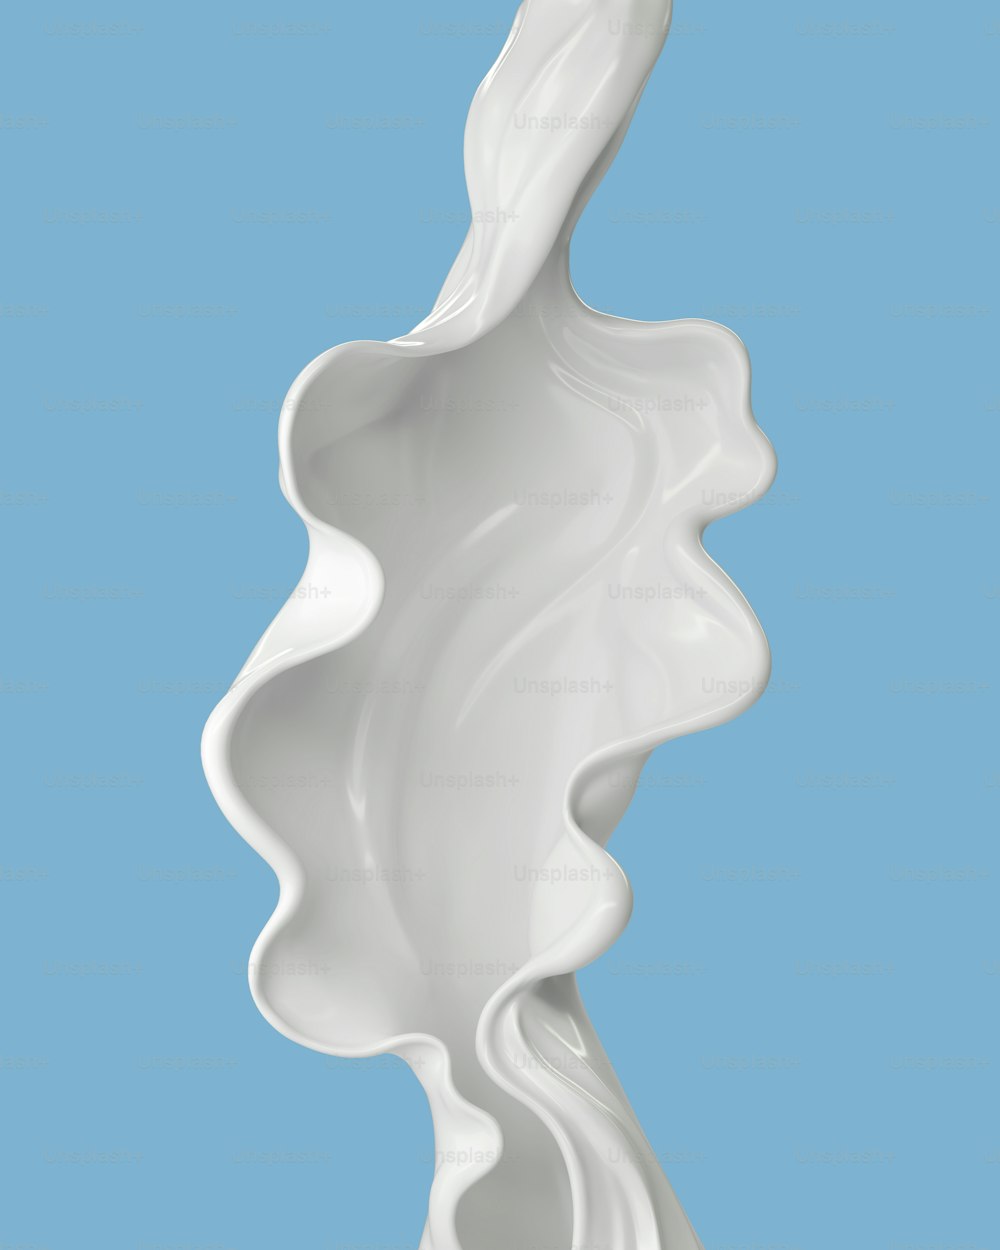 Milk Cream or White Liquid Splash in Abstract Shape, 3d illustration.